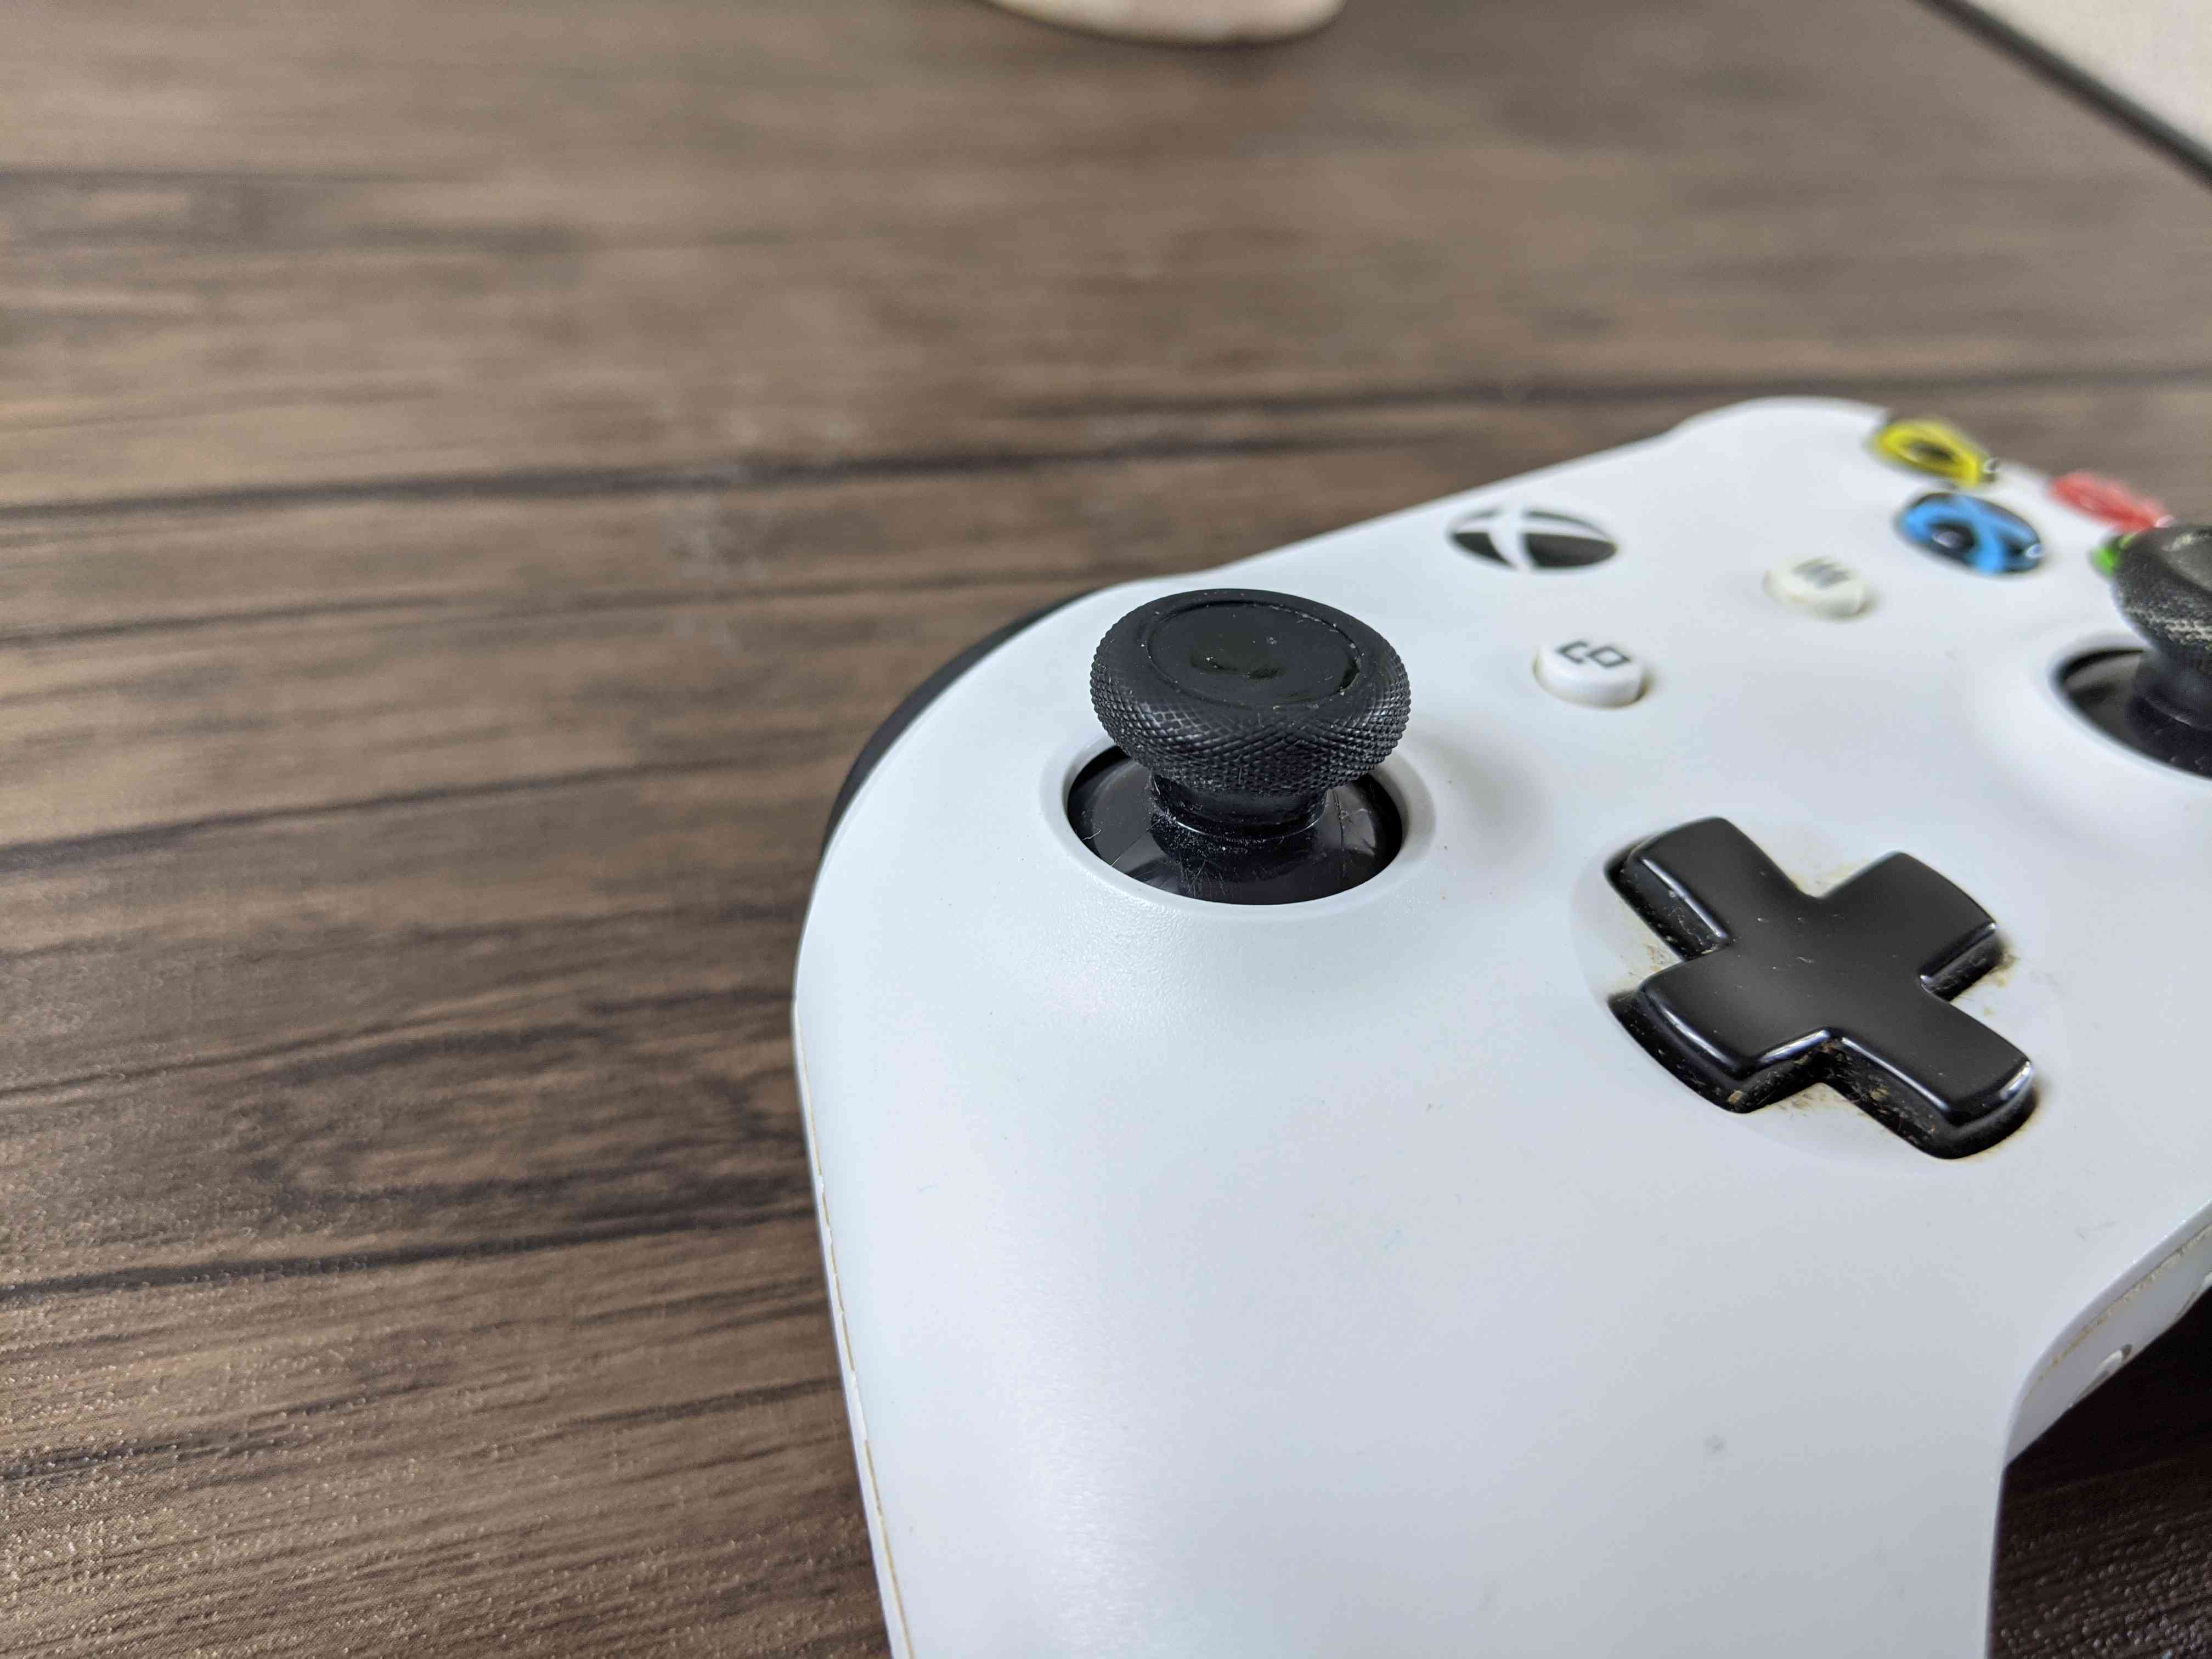 Ett rengörat thumbstick för Xbox One-kontroller.